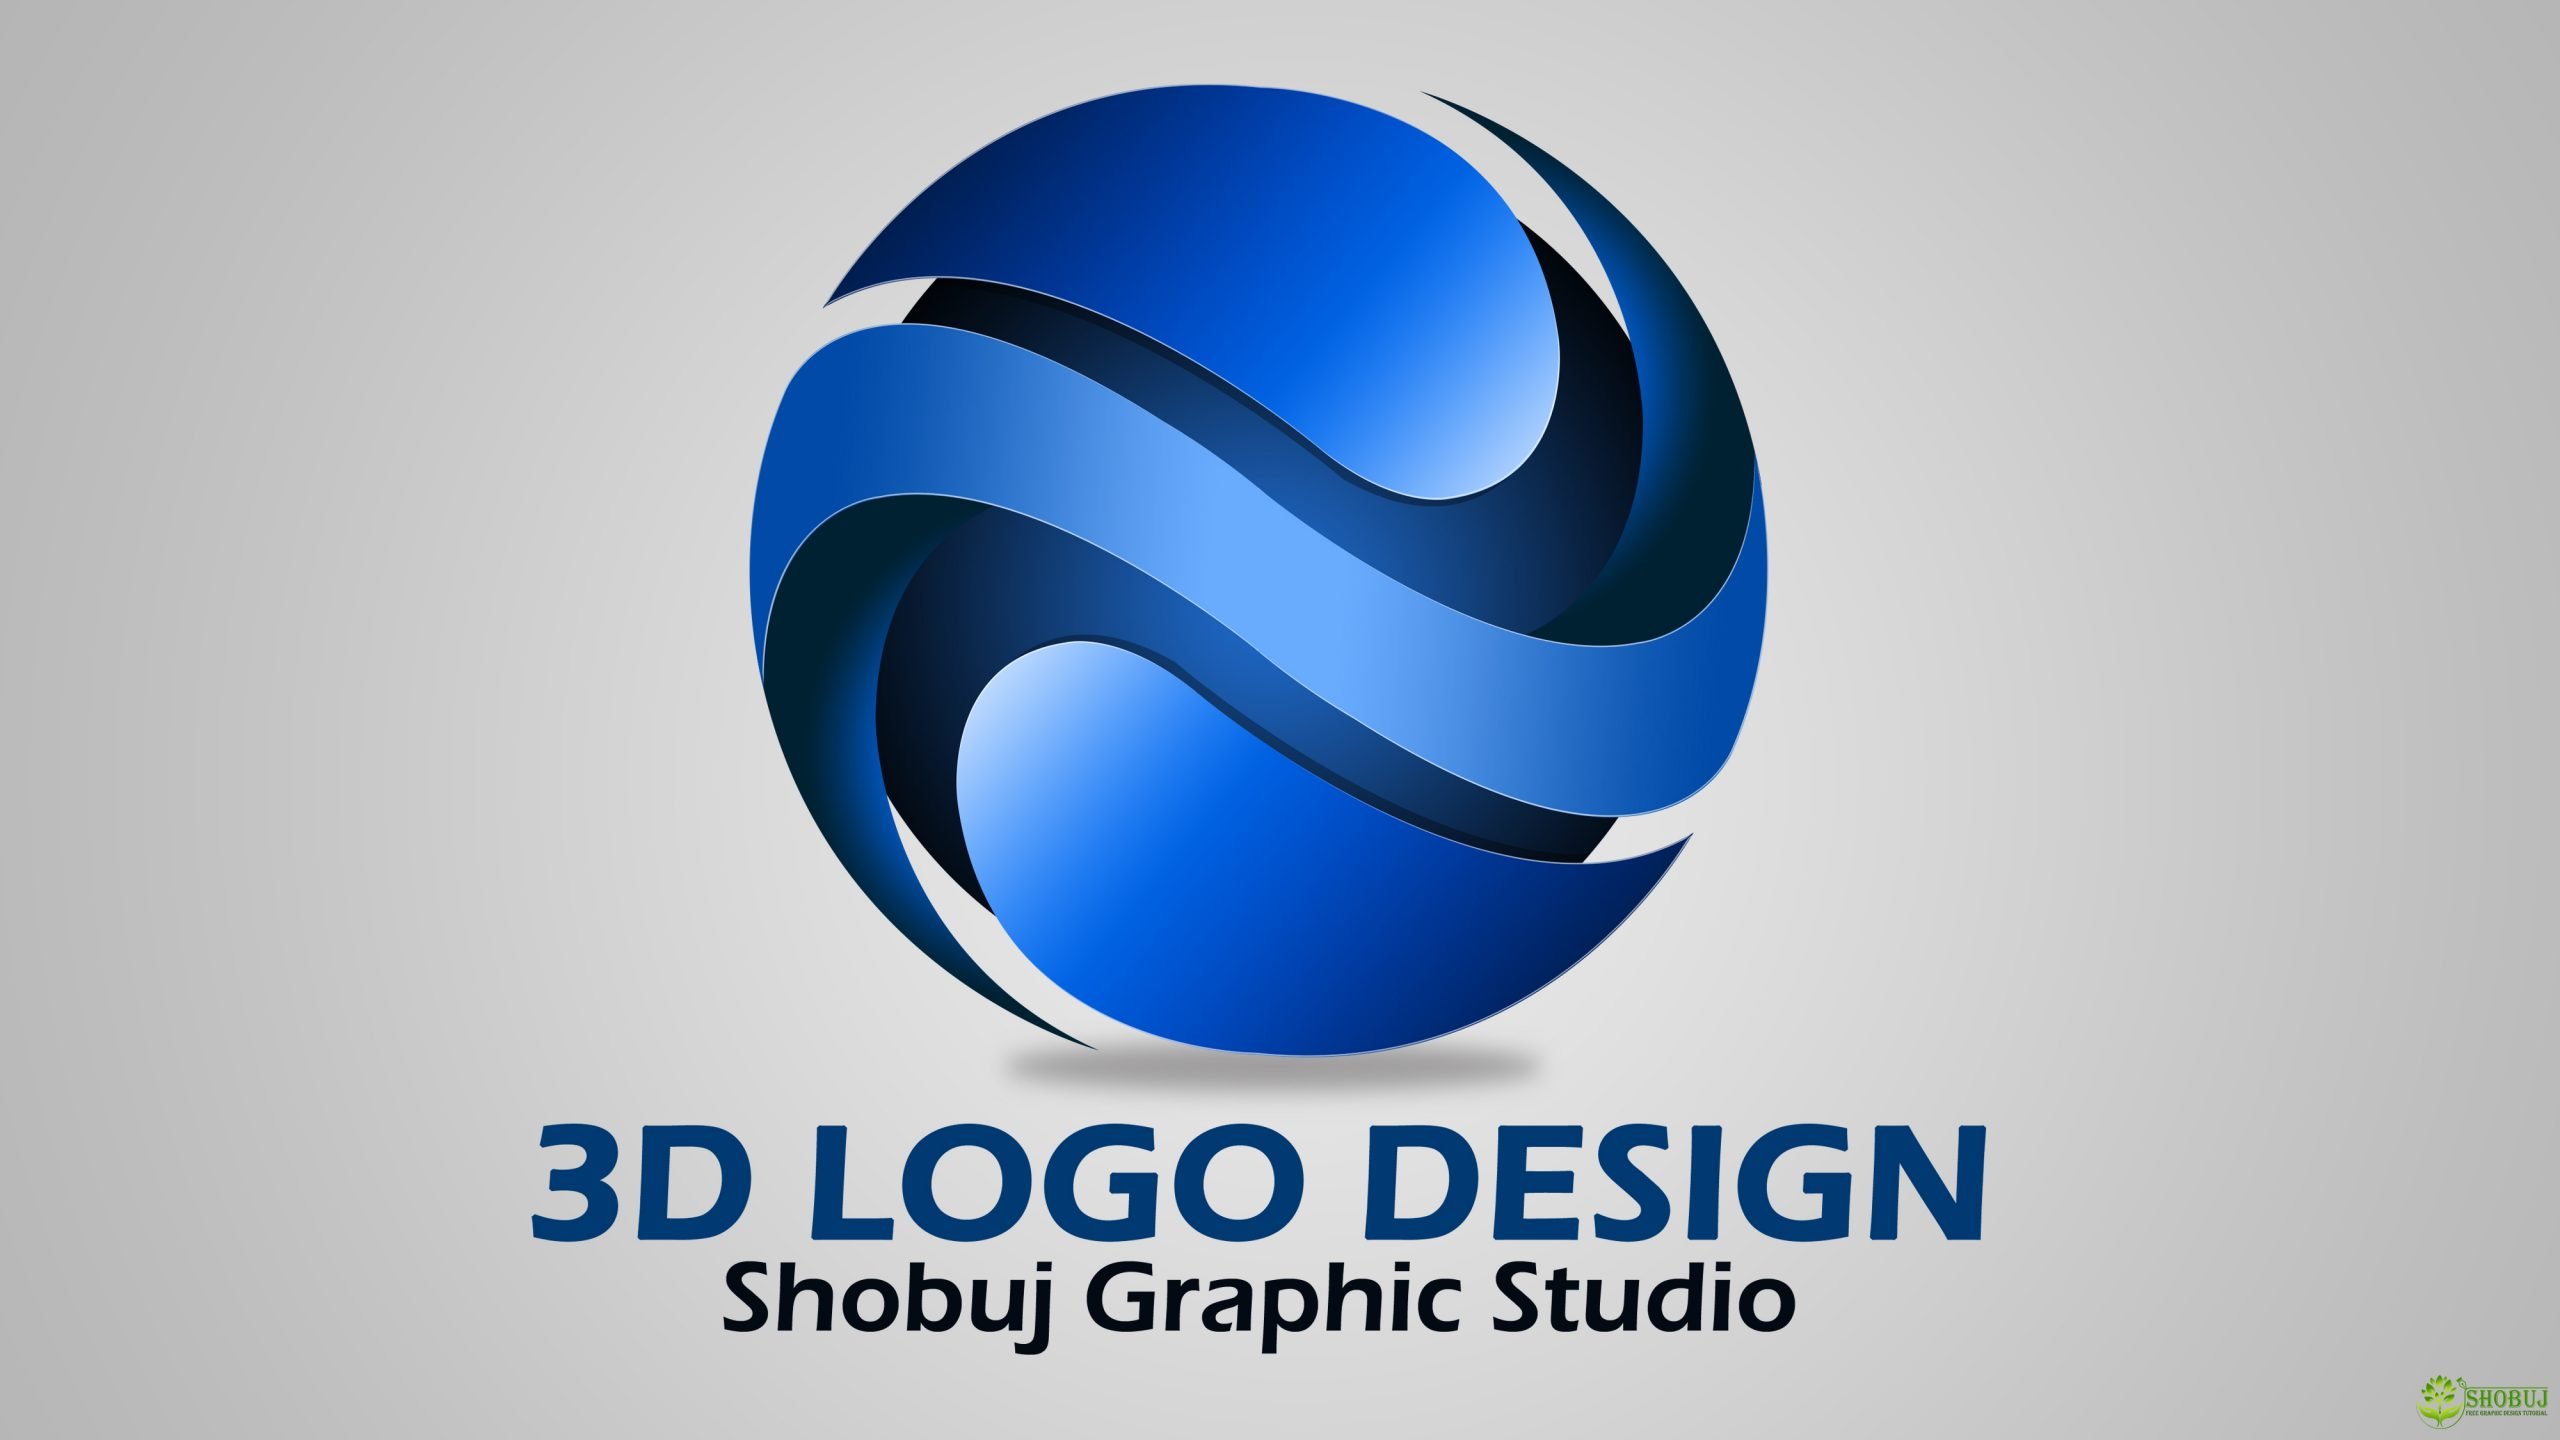 3d-Logo-Design-Full-PSD-Source-download-scaled.jpg